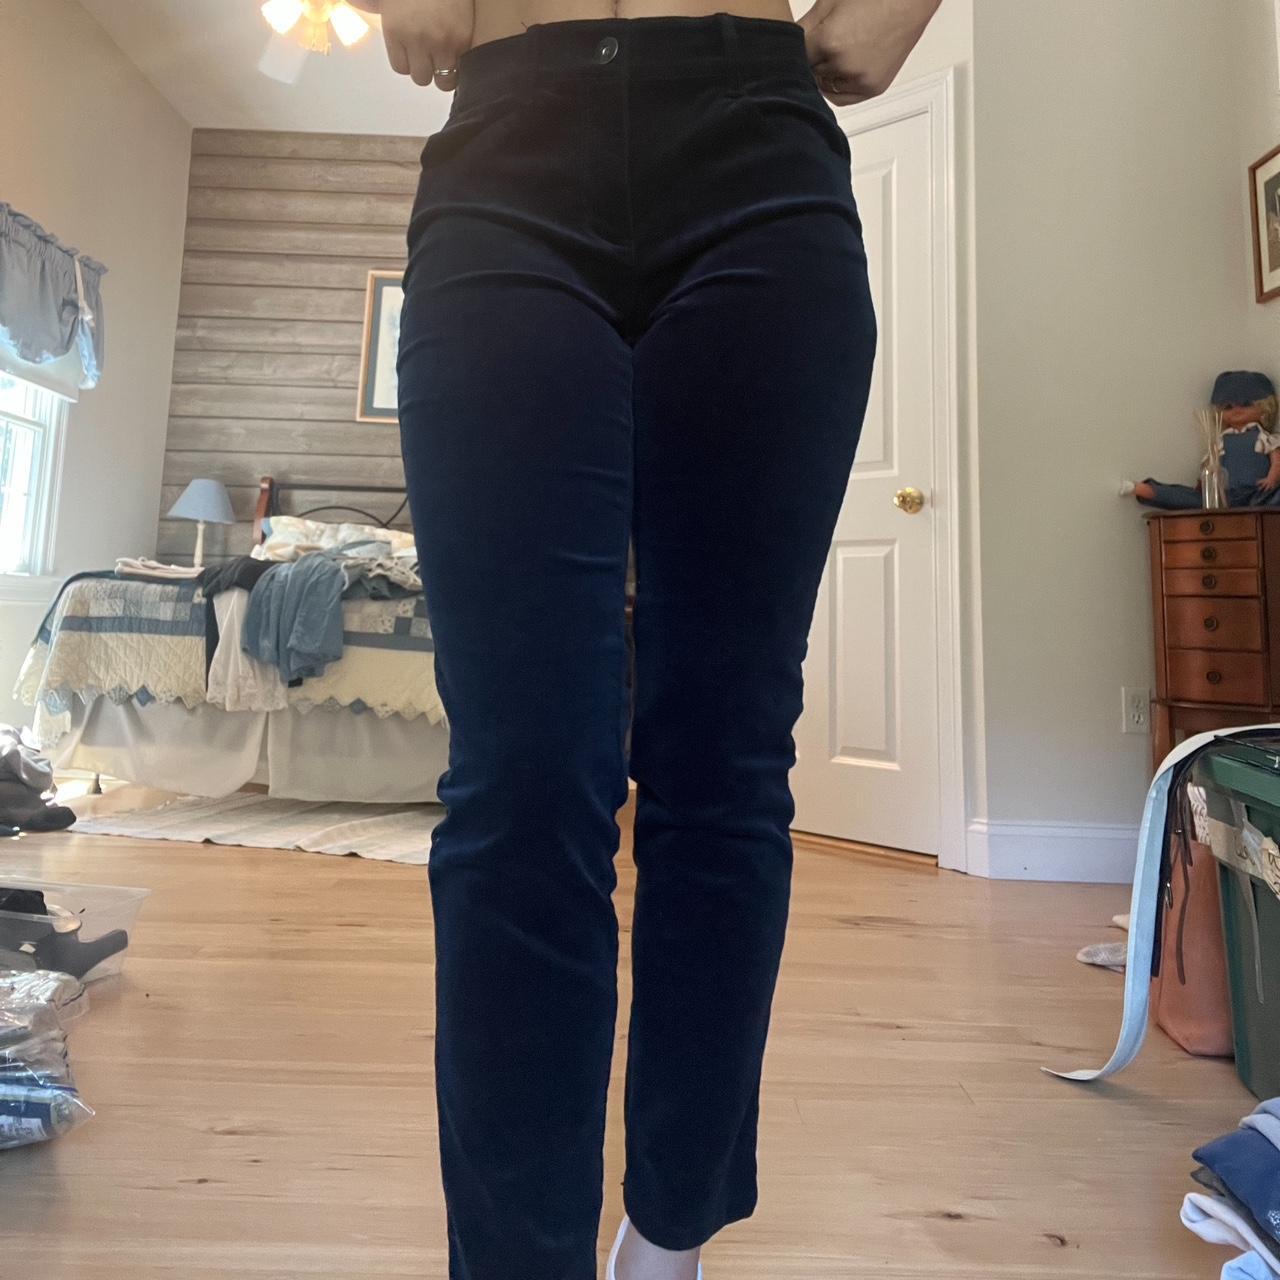 J. Jill Yoga Pants